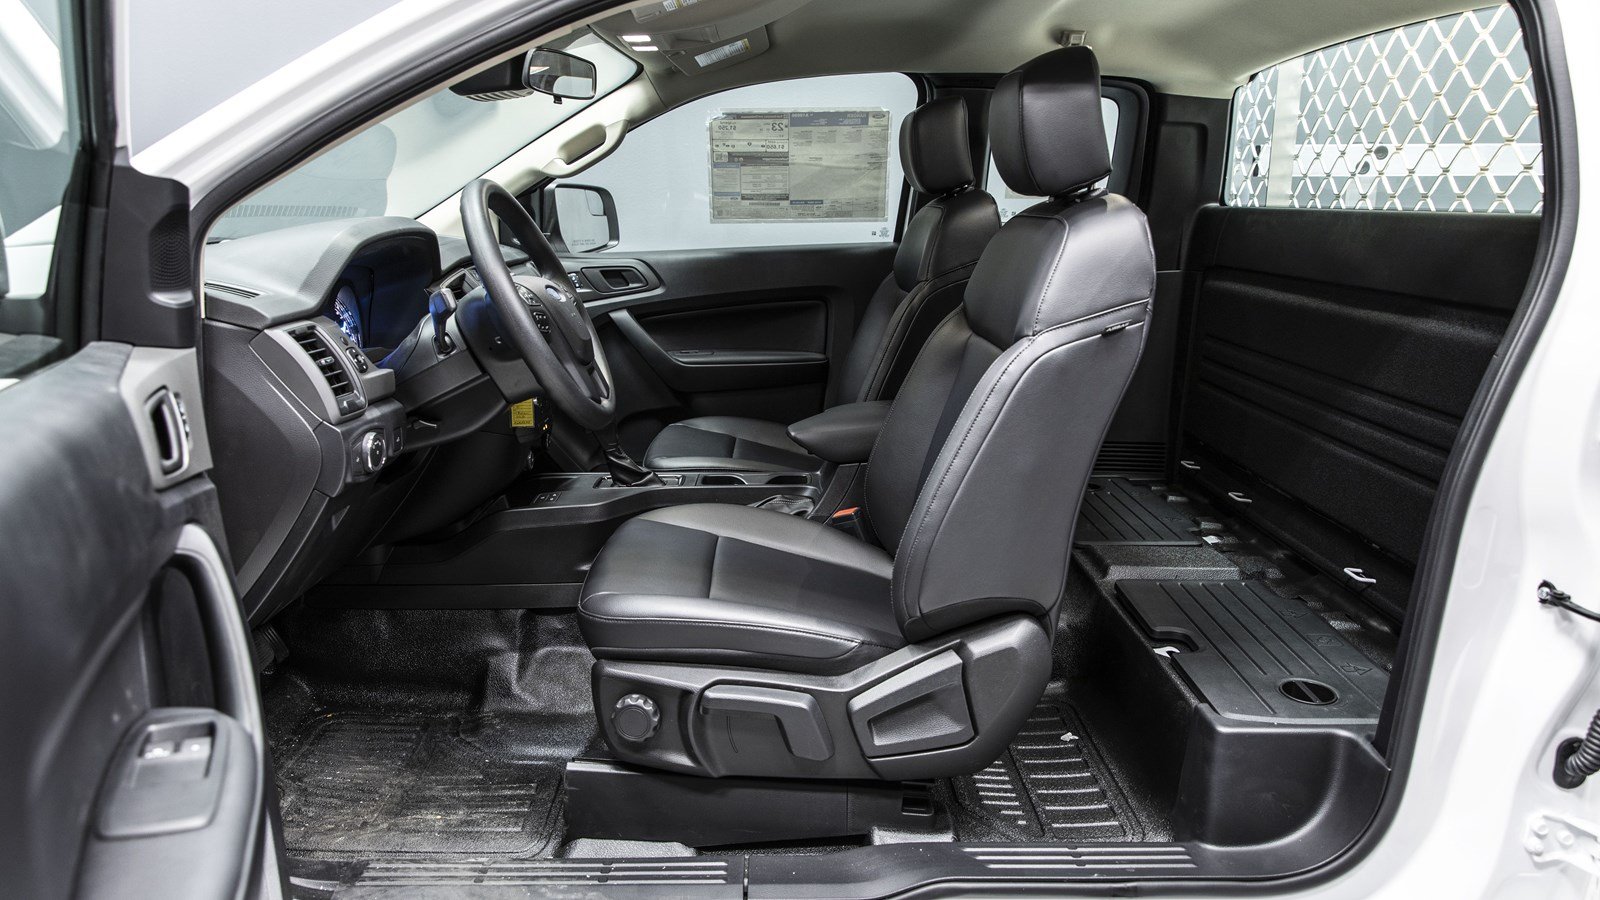 Ford Ranger 2019 Ranger XL Rear Seat Delete Option 489411f020f91a5d2abc6072b5640495